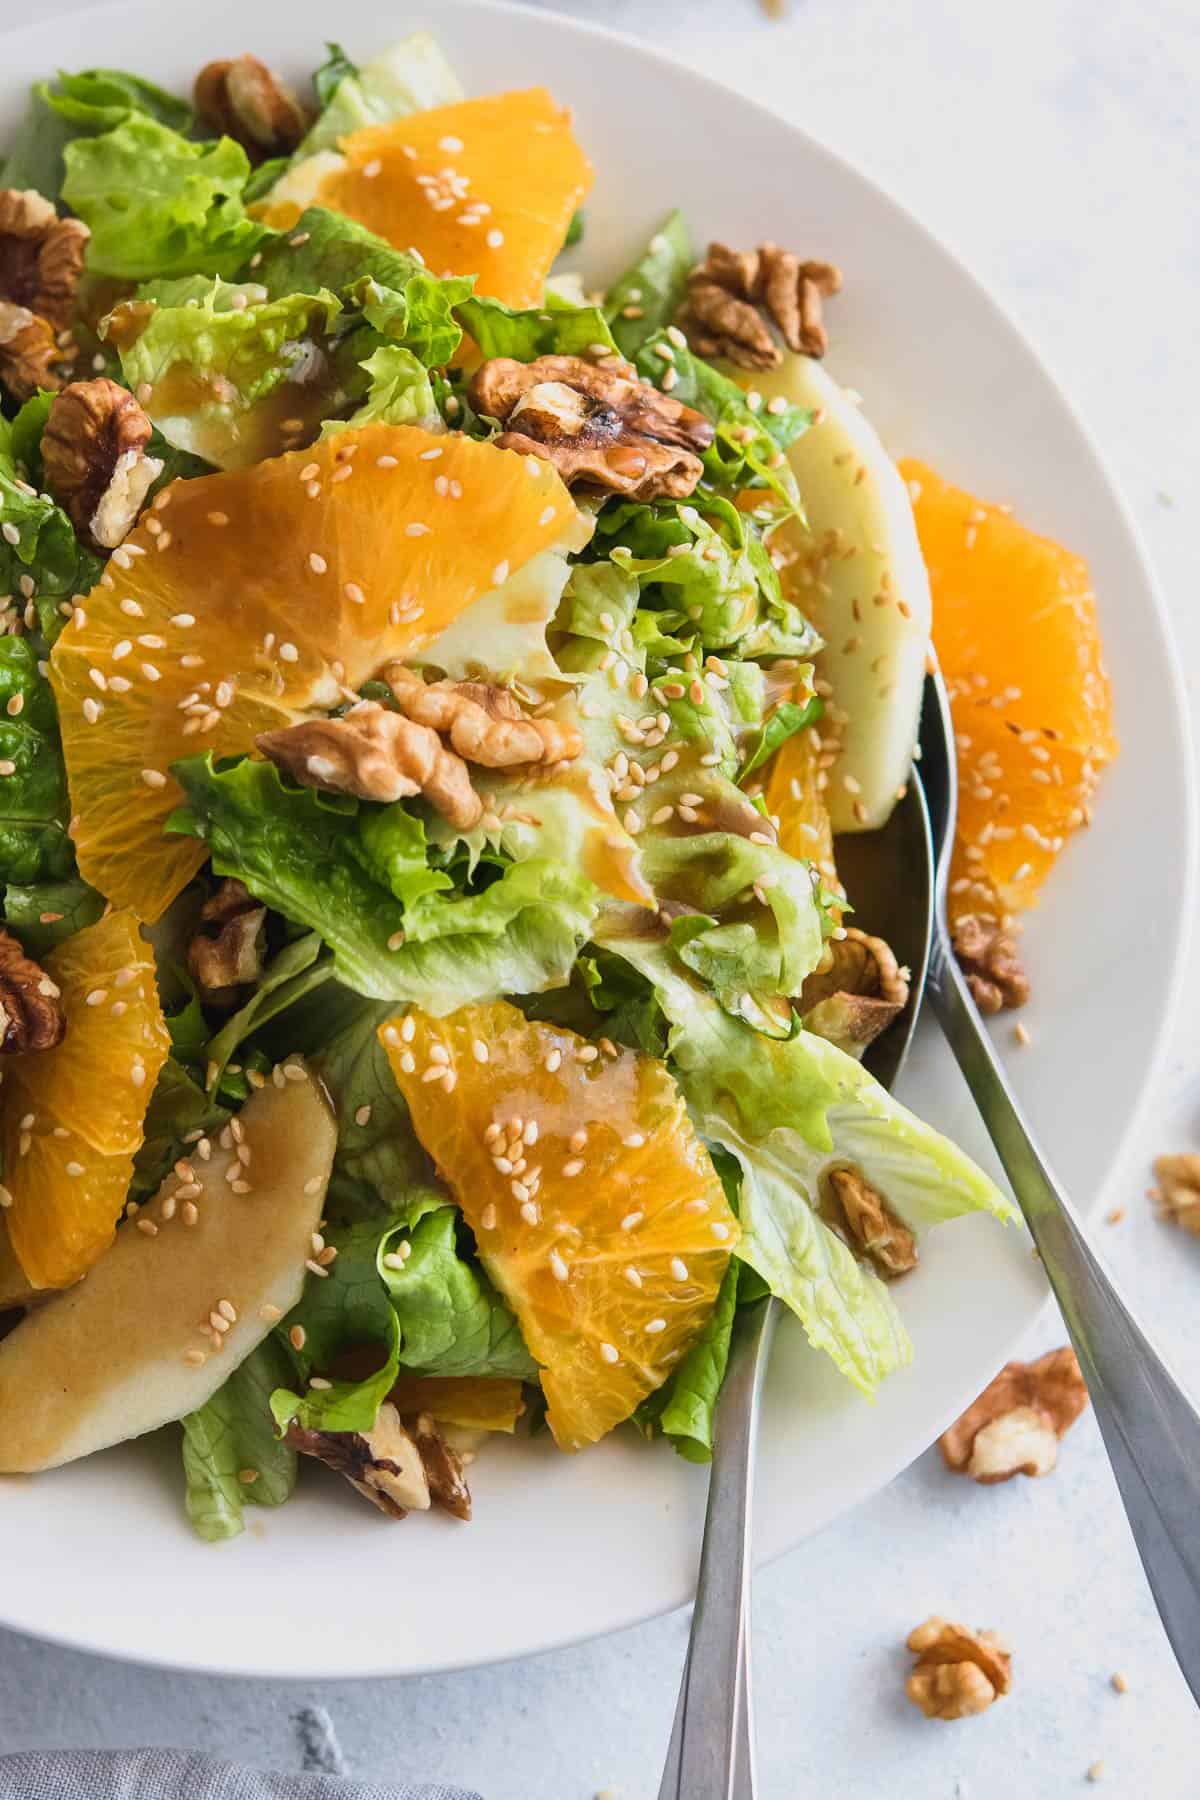 Salad With Orange Slices